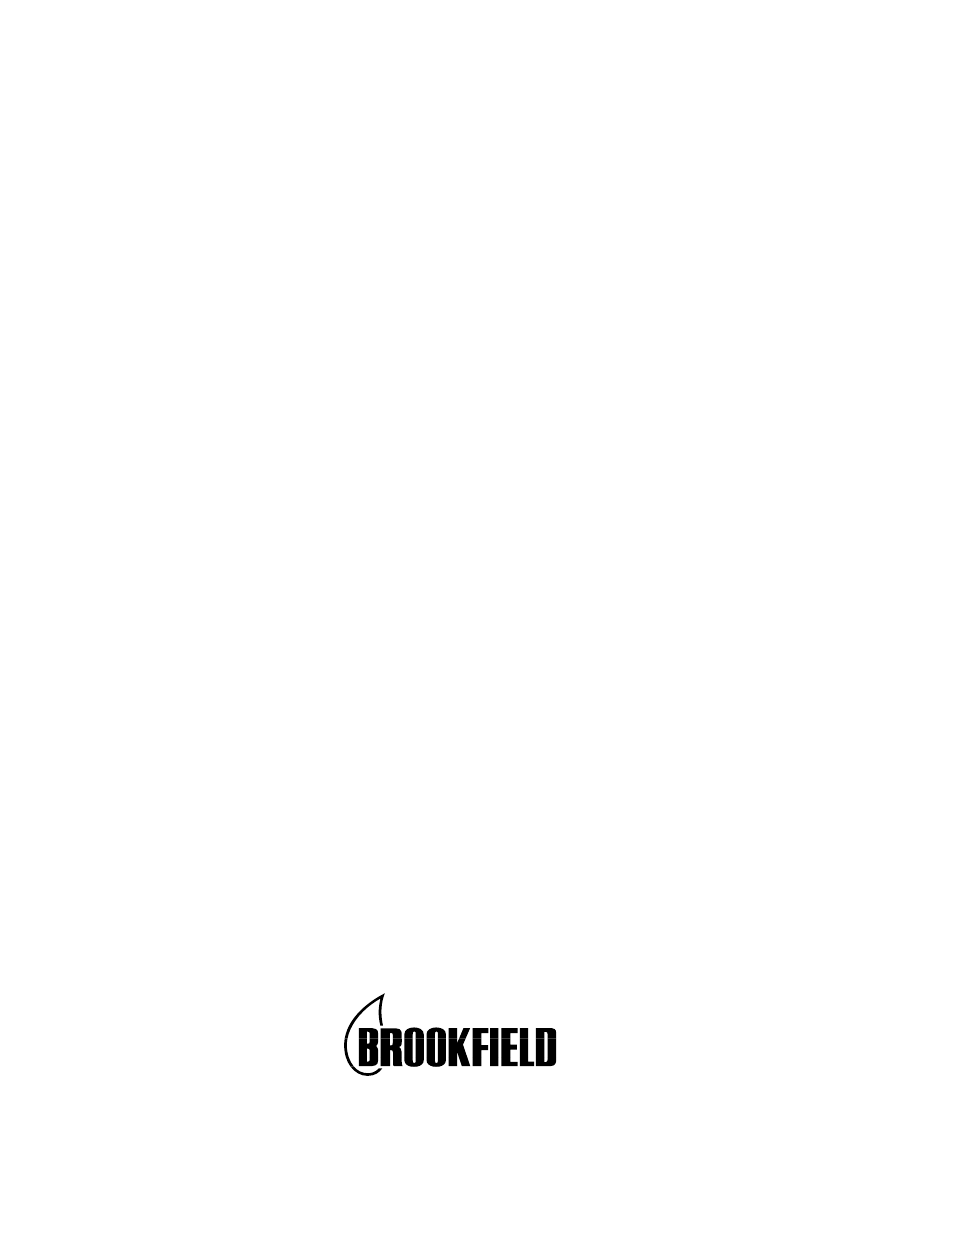 Brookfield DV-III Rheometer User Manual | 83 pages